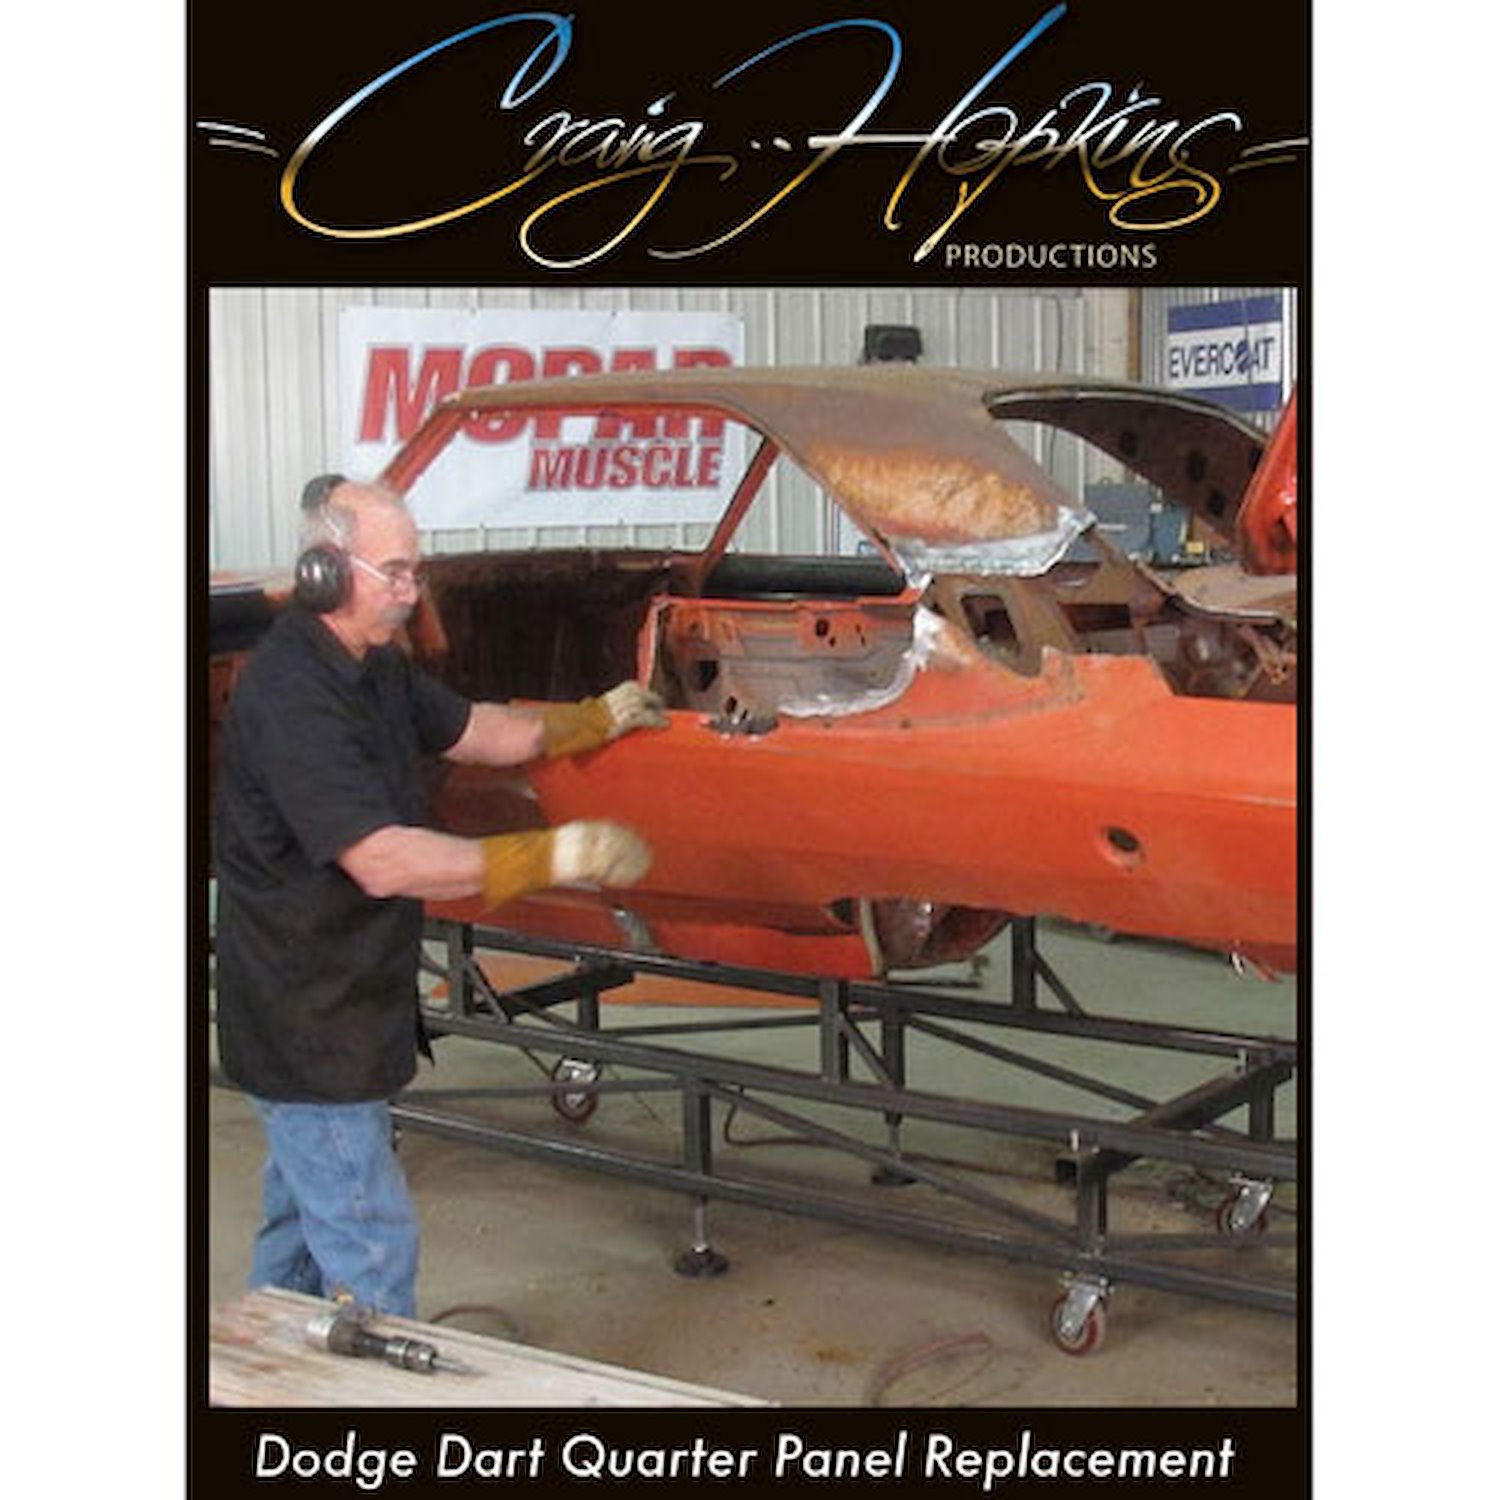 Graig Hopkins Productions Instructional DVD Dodge Dart Quarter Panel Replacement